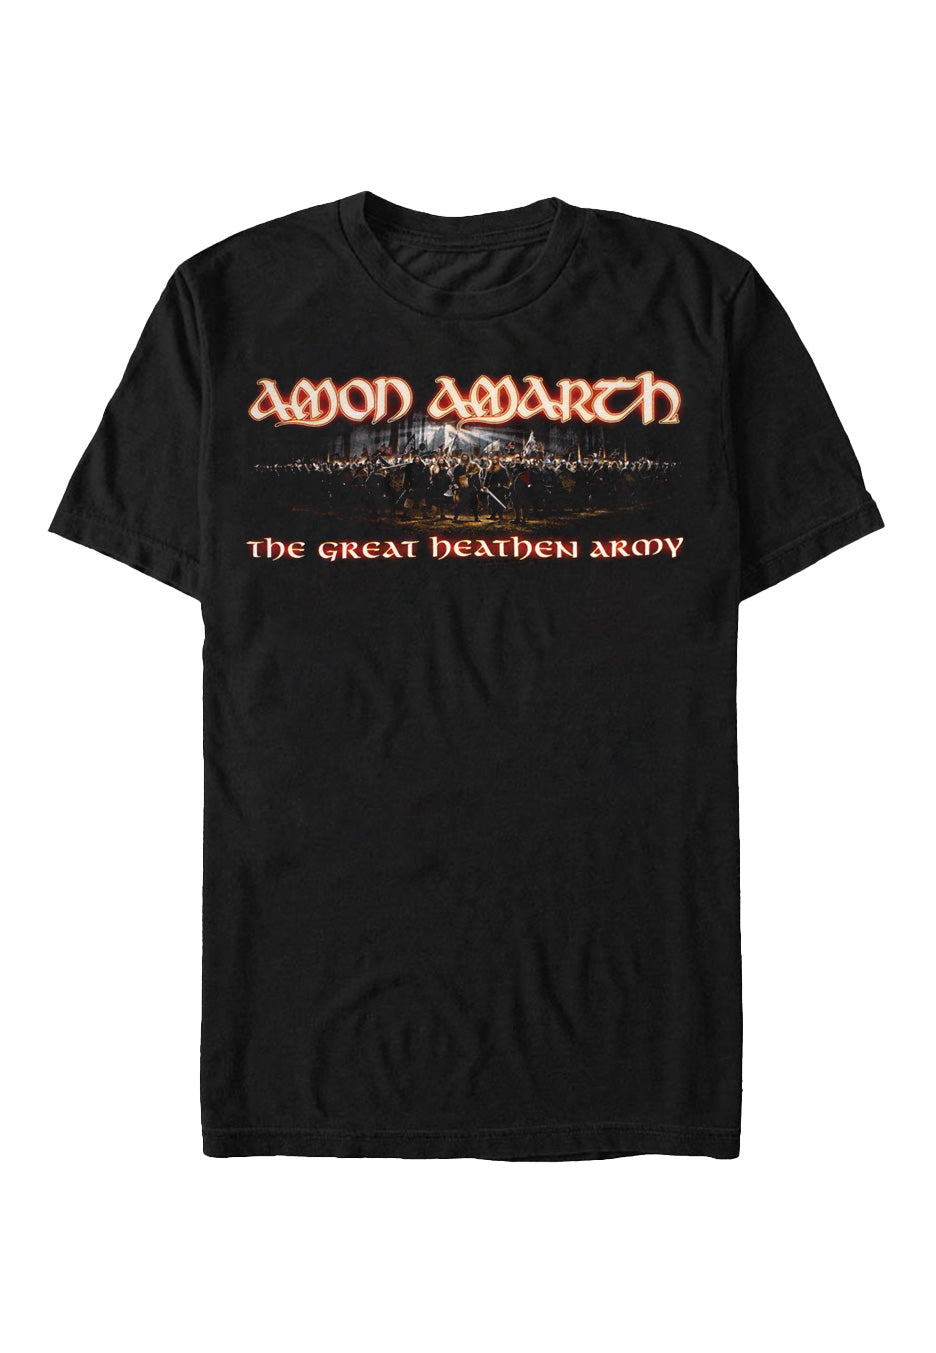 Amon Amarth - The Great Heaten Army (Full Army) - T-Shirt